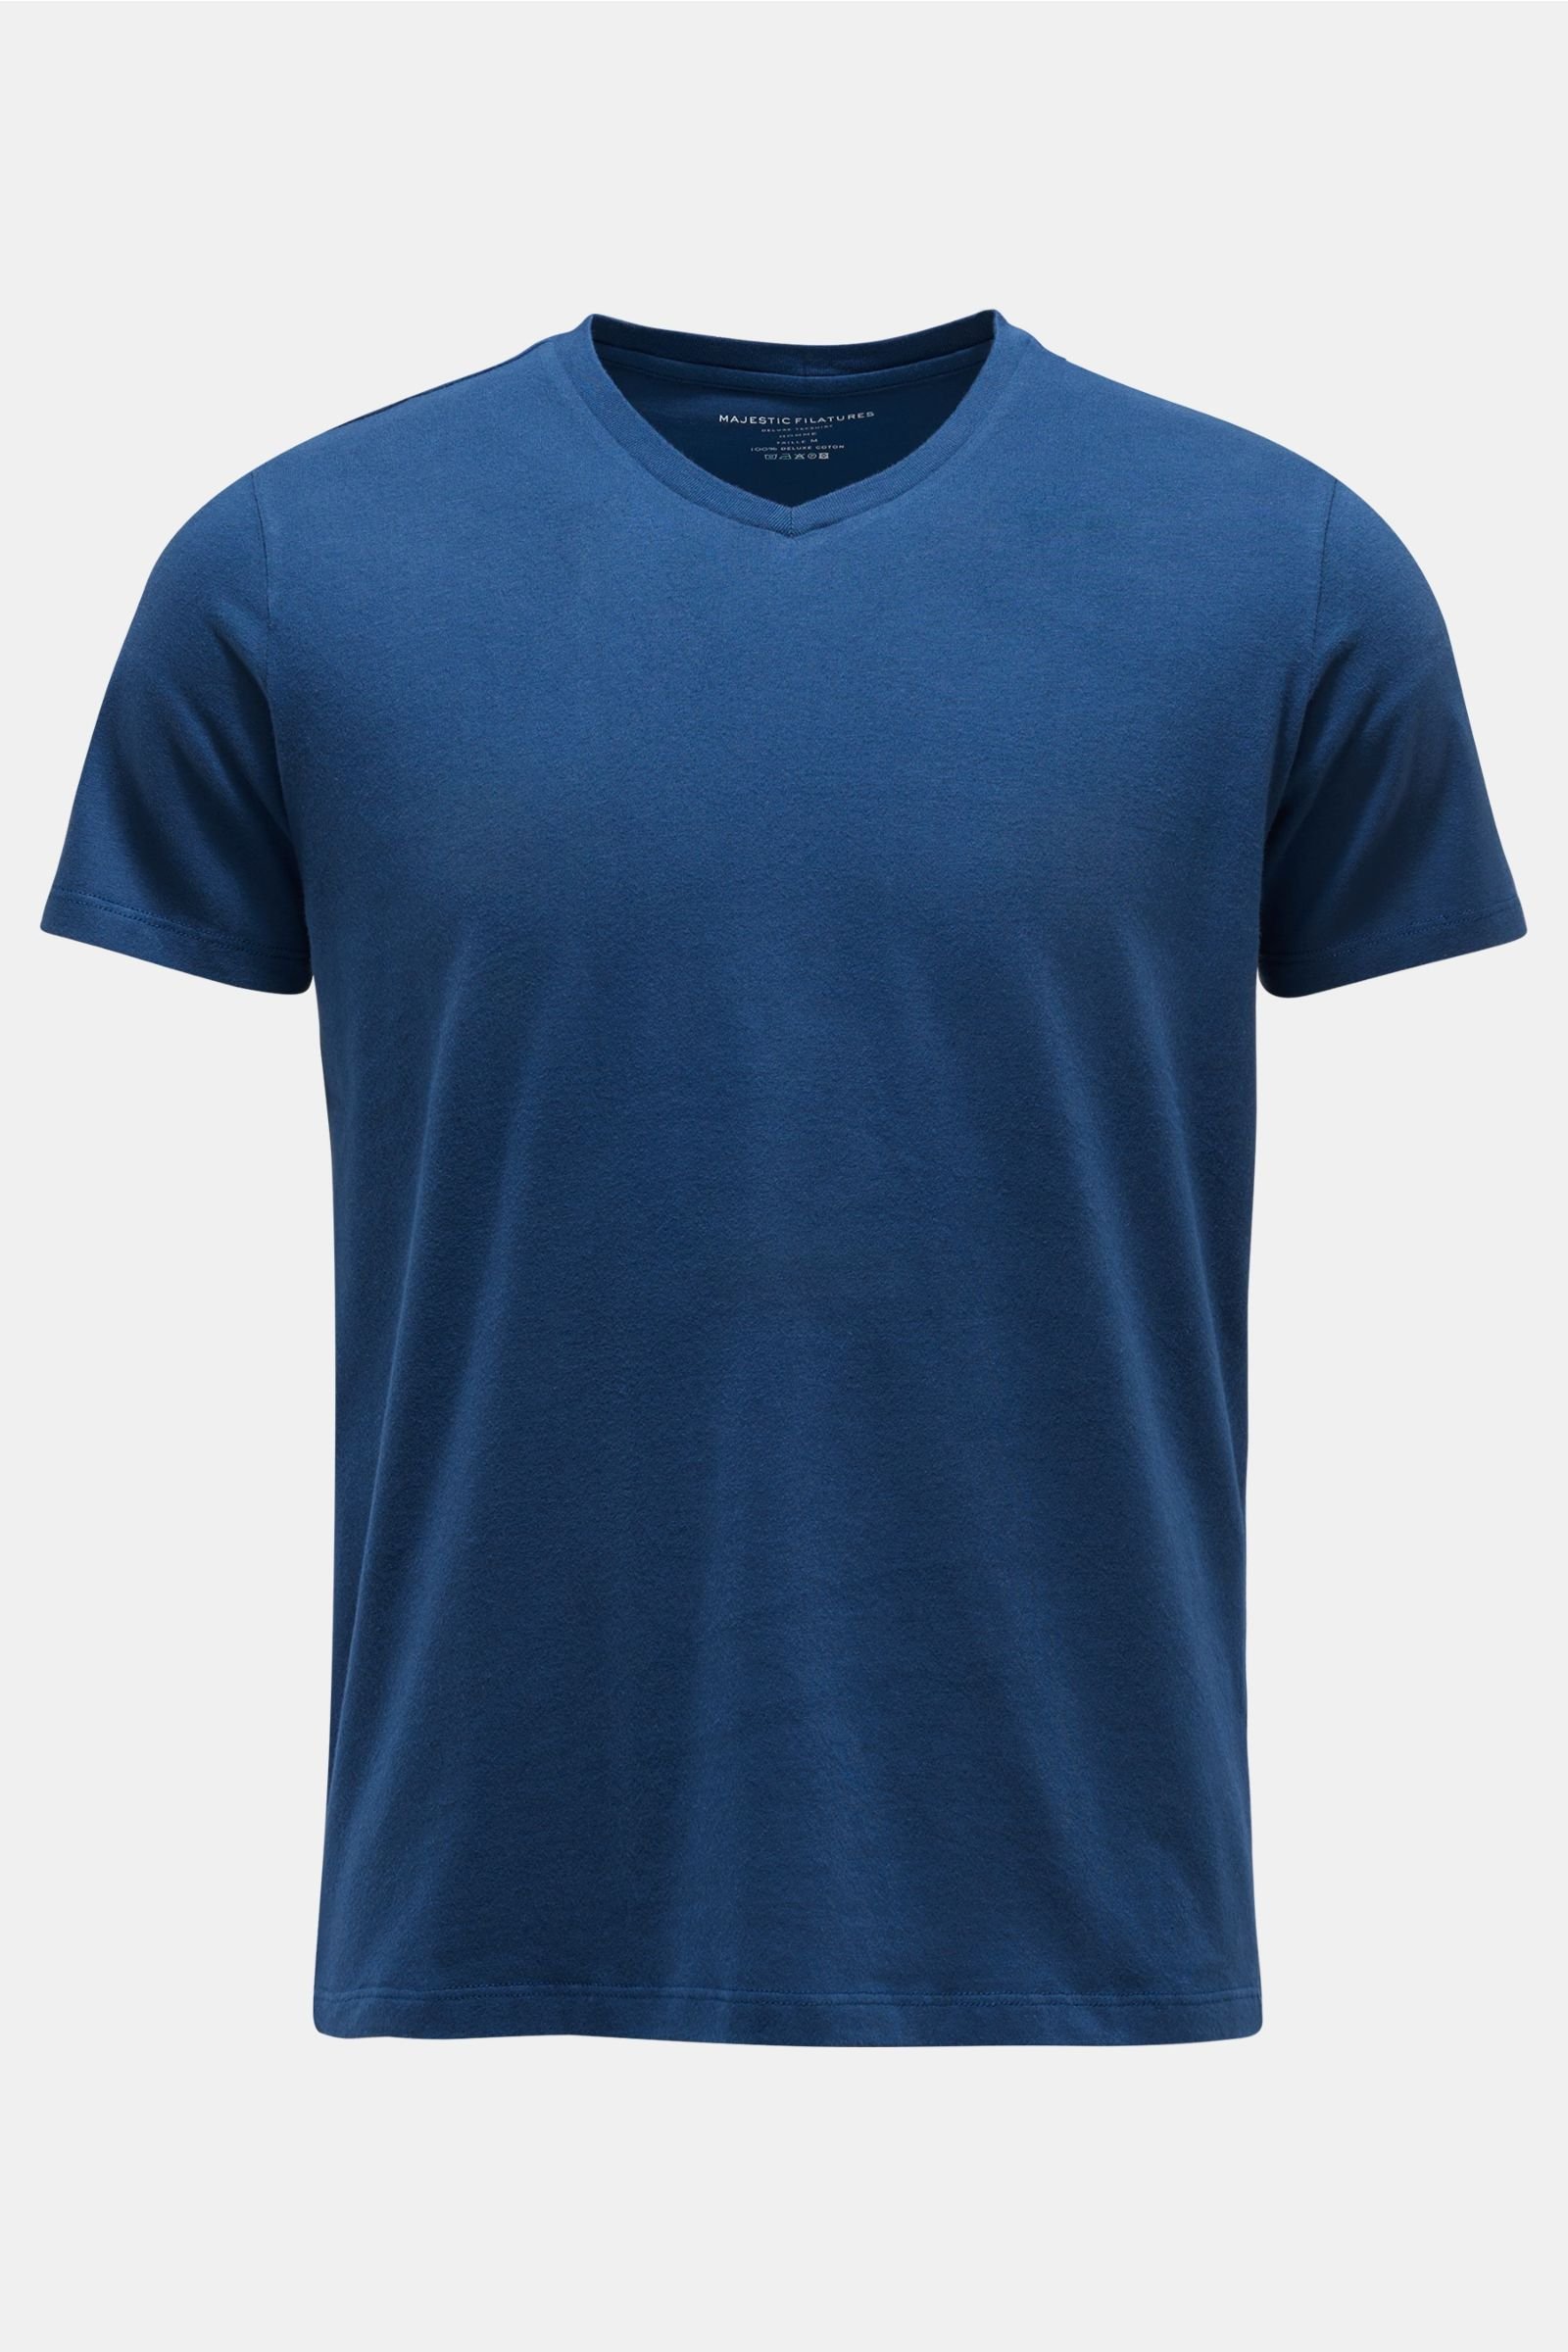 V-neck T-shirt dark blue